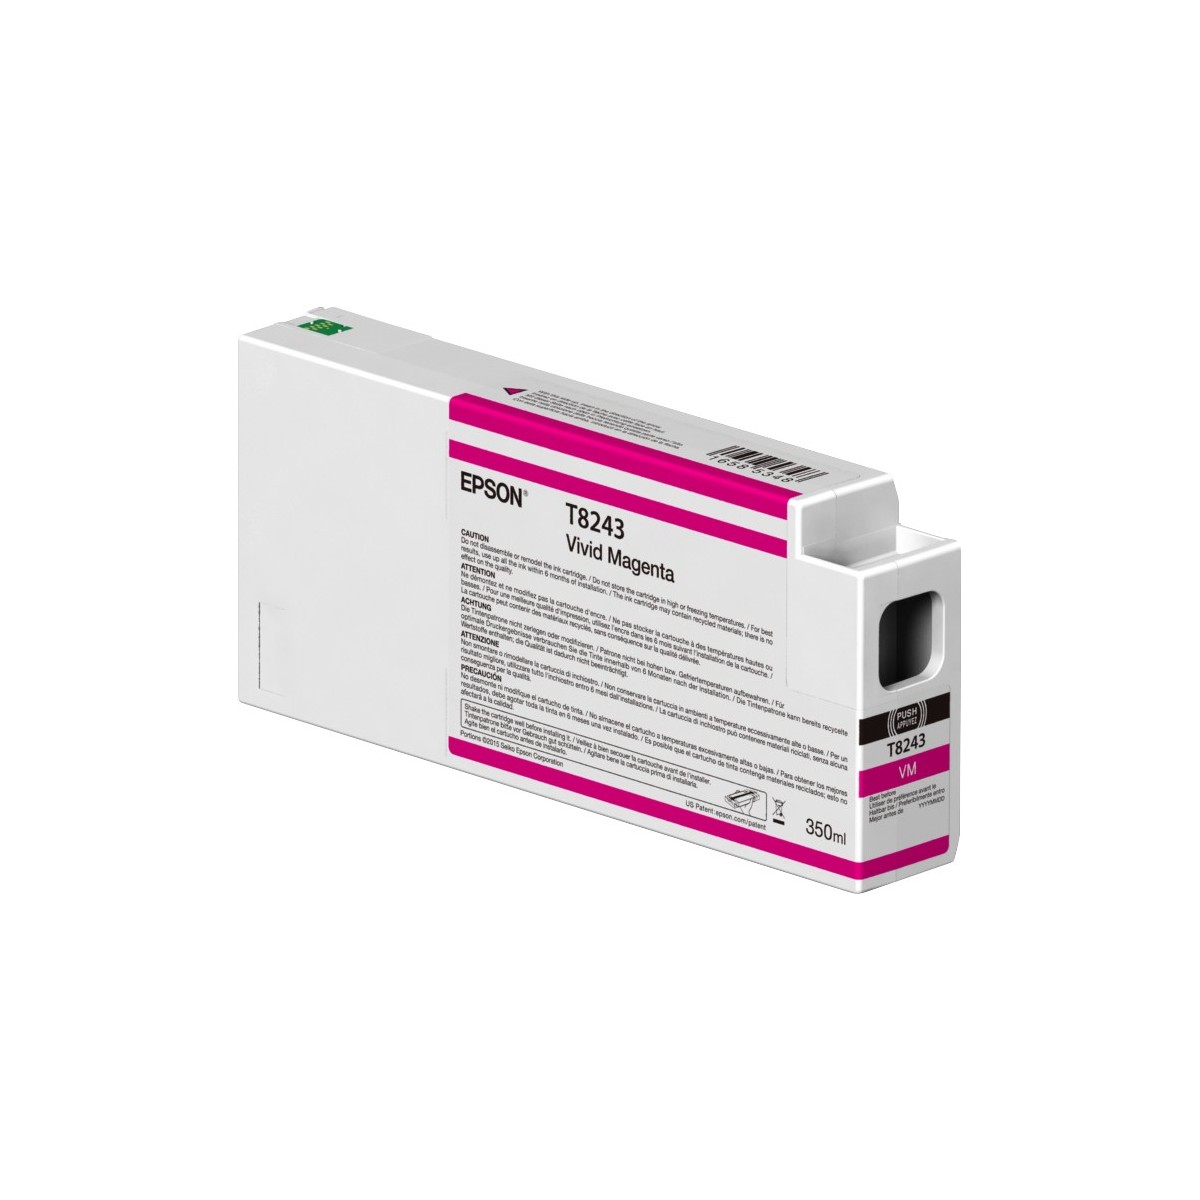 Epson Singlepack Vivid Magenta T824300 UltraChrome HDX/HD 350ml - Pigment-based ink - 350 ml - 1 pc(s)